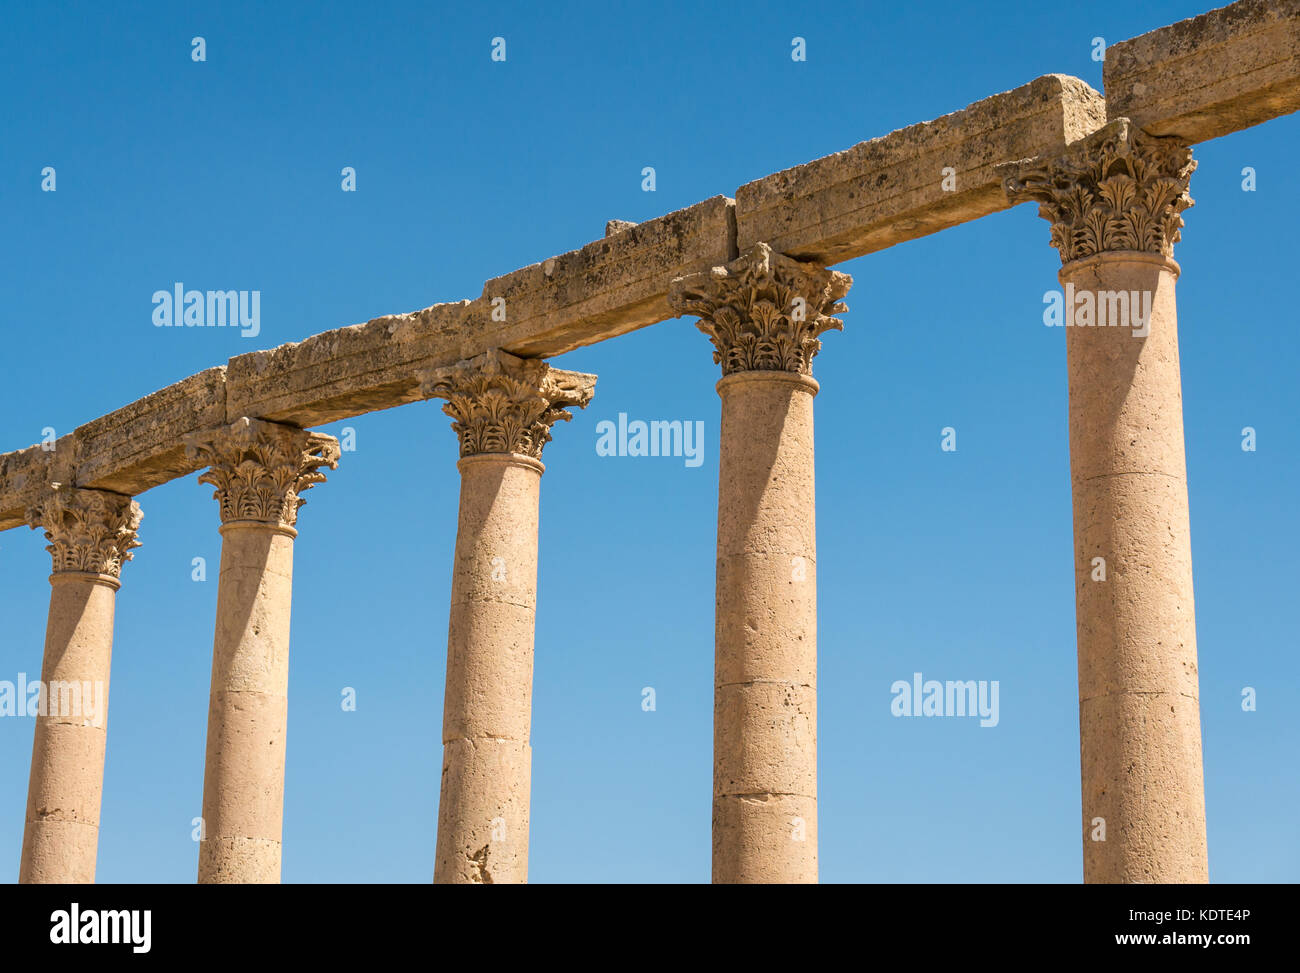 Corinthian columns along the Cardo with acanthus leaf decoration, Roman city of Jerash, ancient Gerasa, archeological site Jordan, Middle East Stock Photo